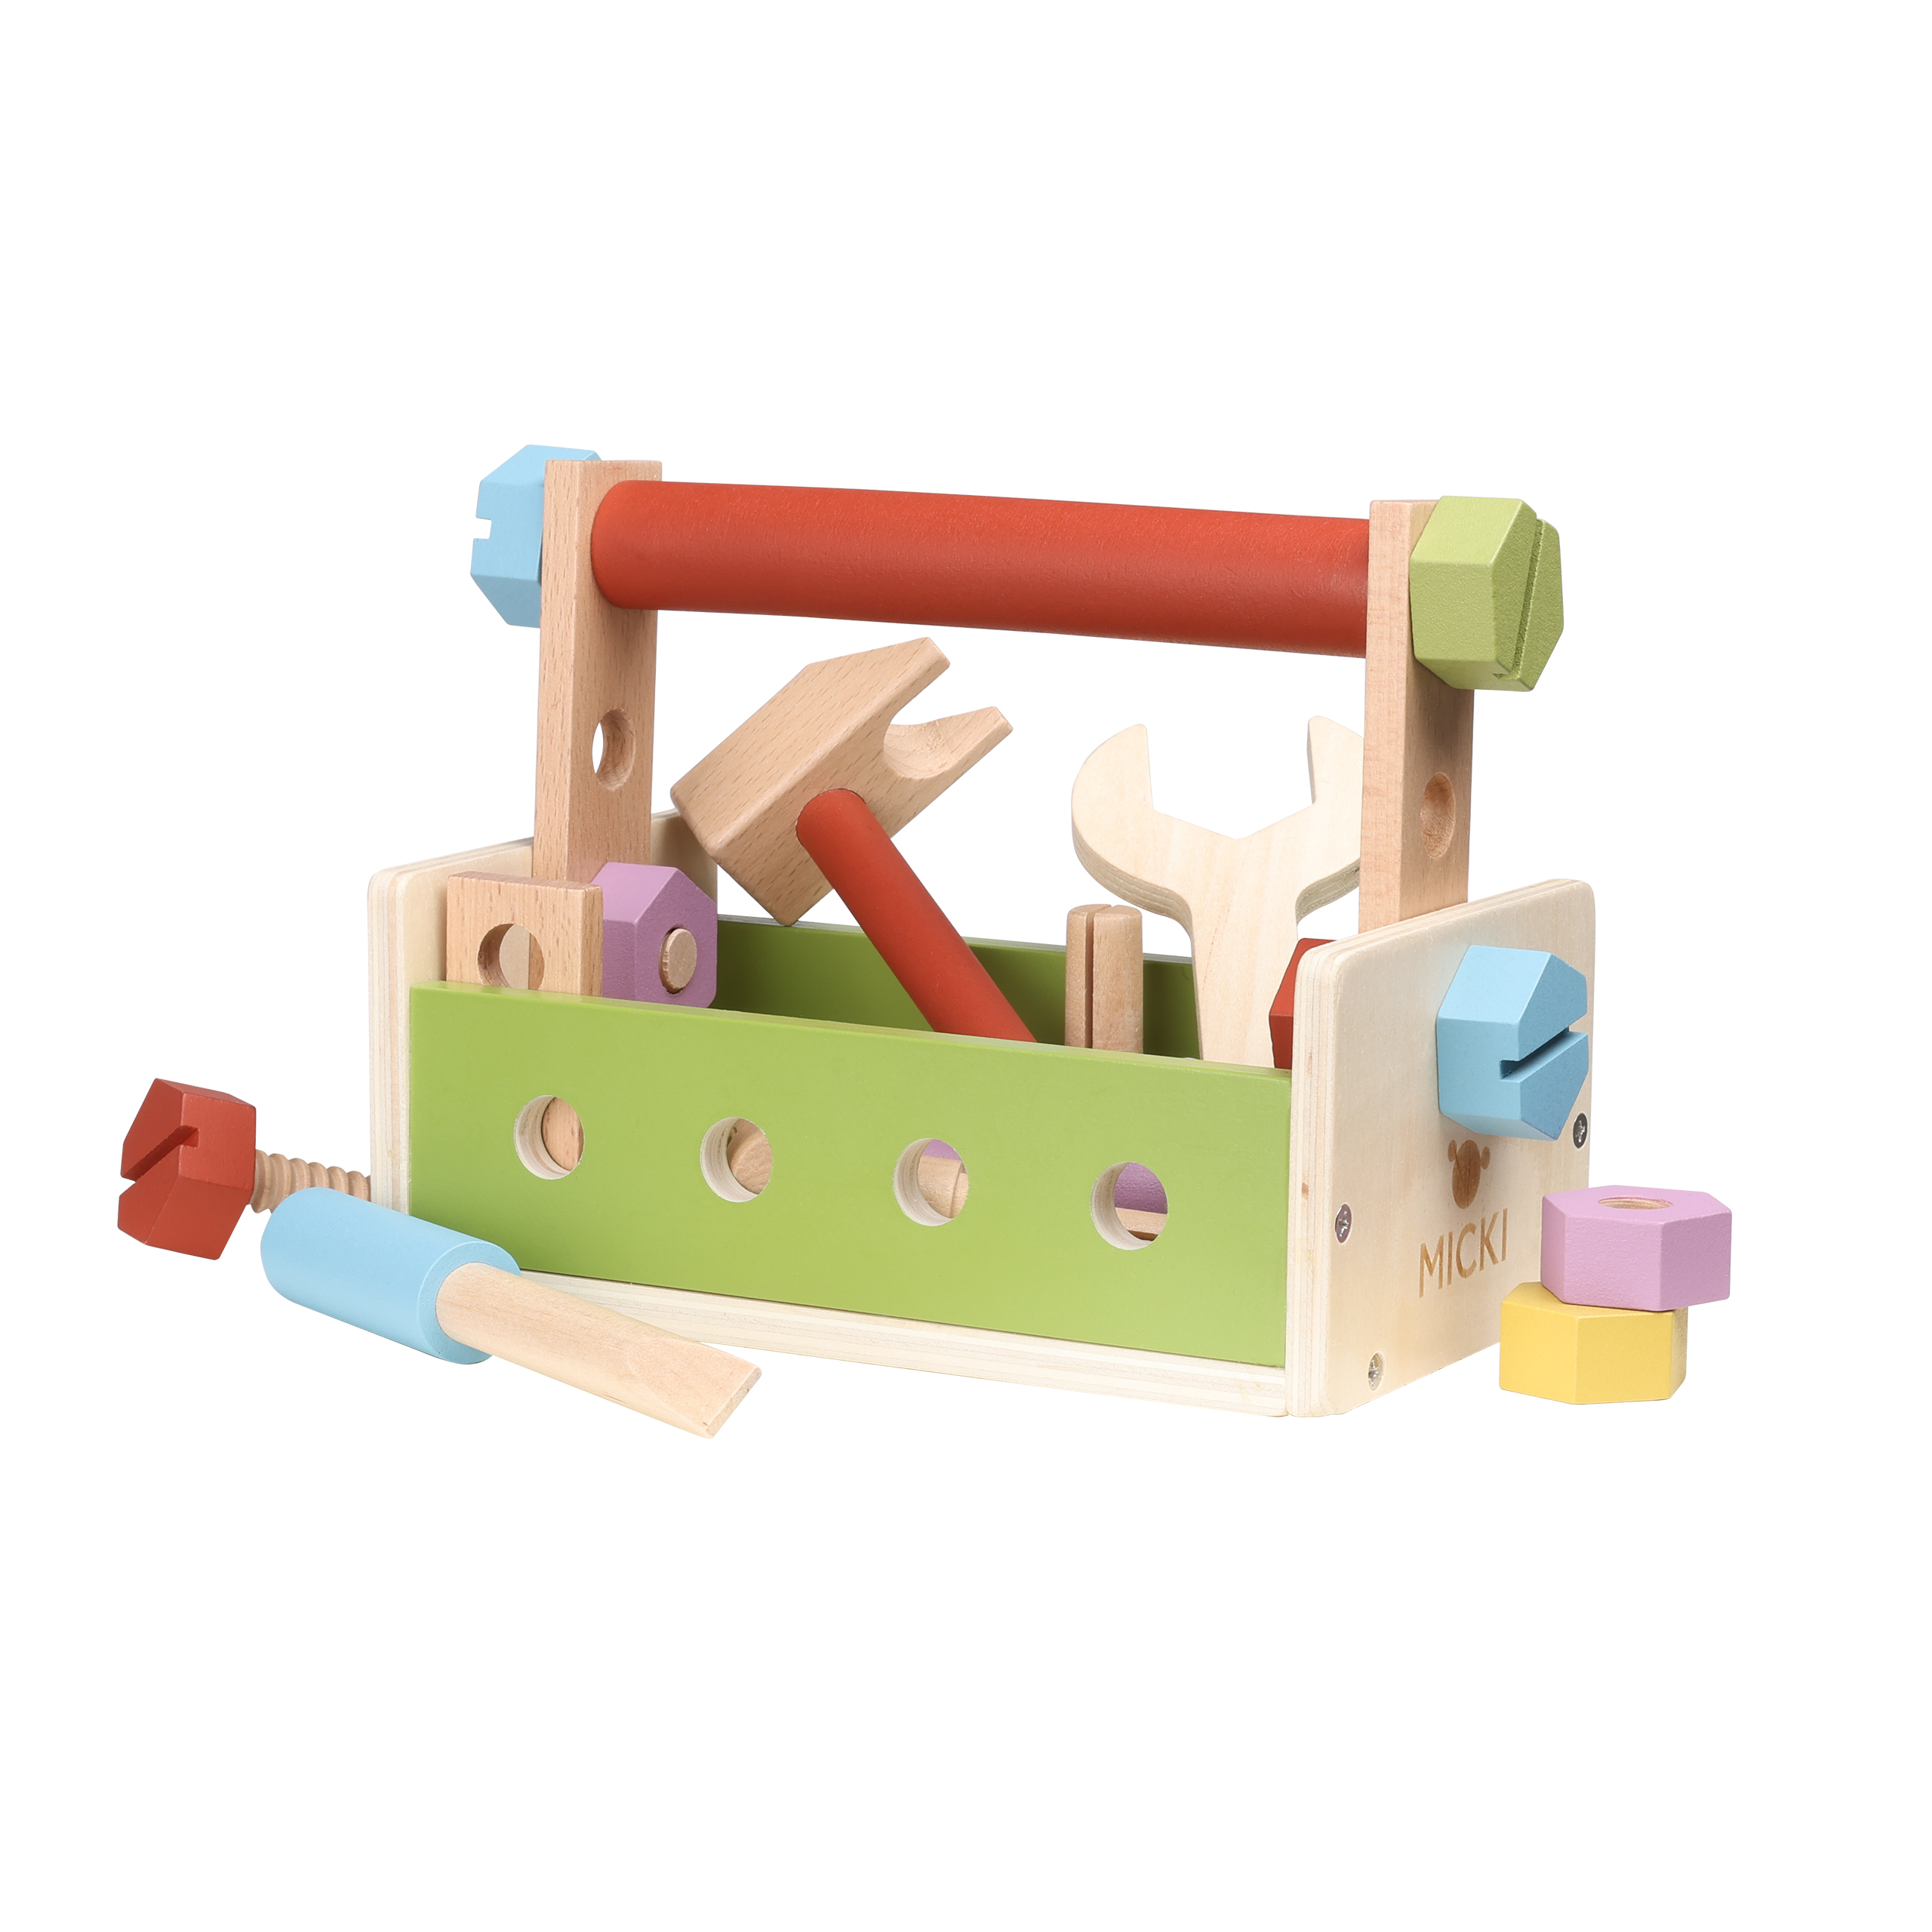 Construction toys micki tool box wooden